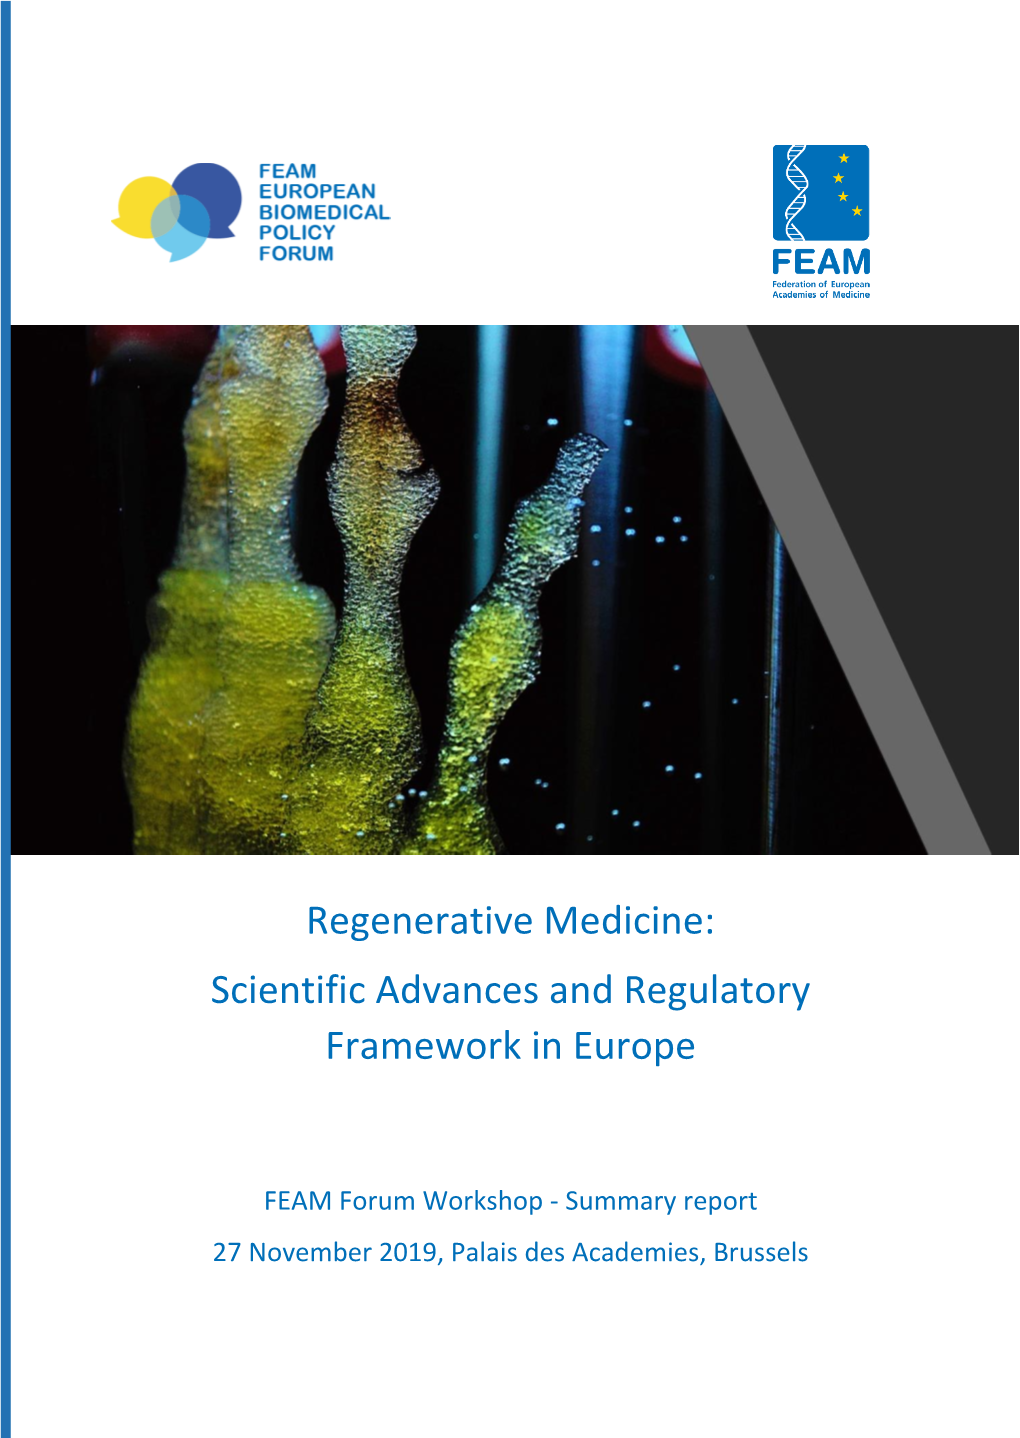 Scientific Advances and Regulatory Framework in Europe